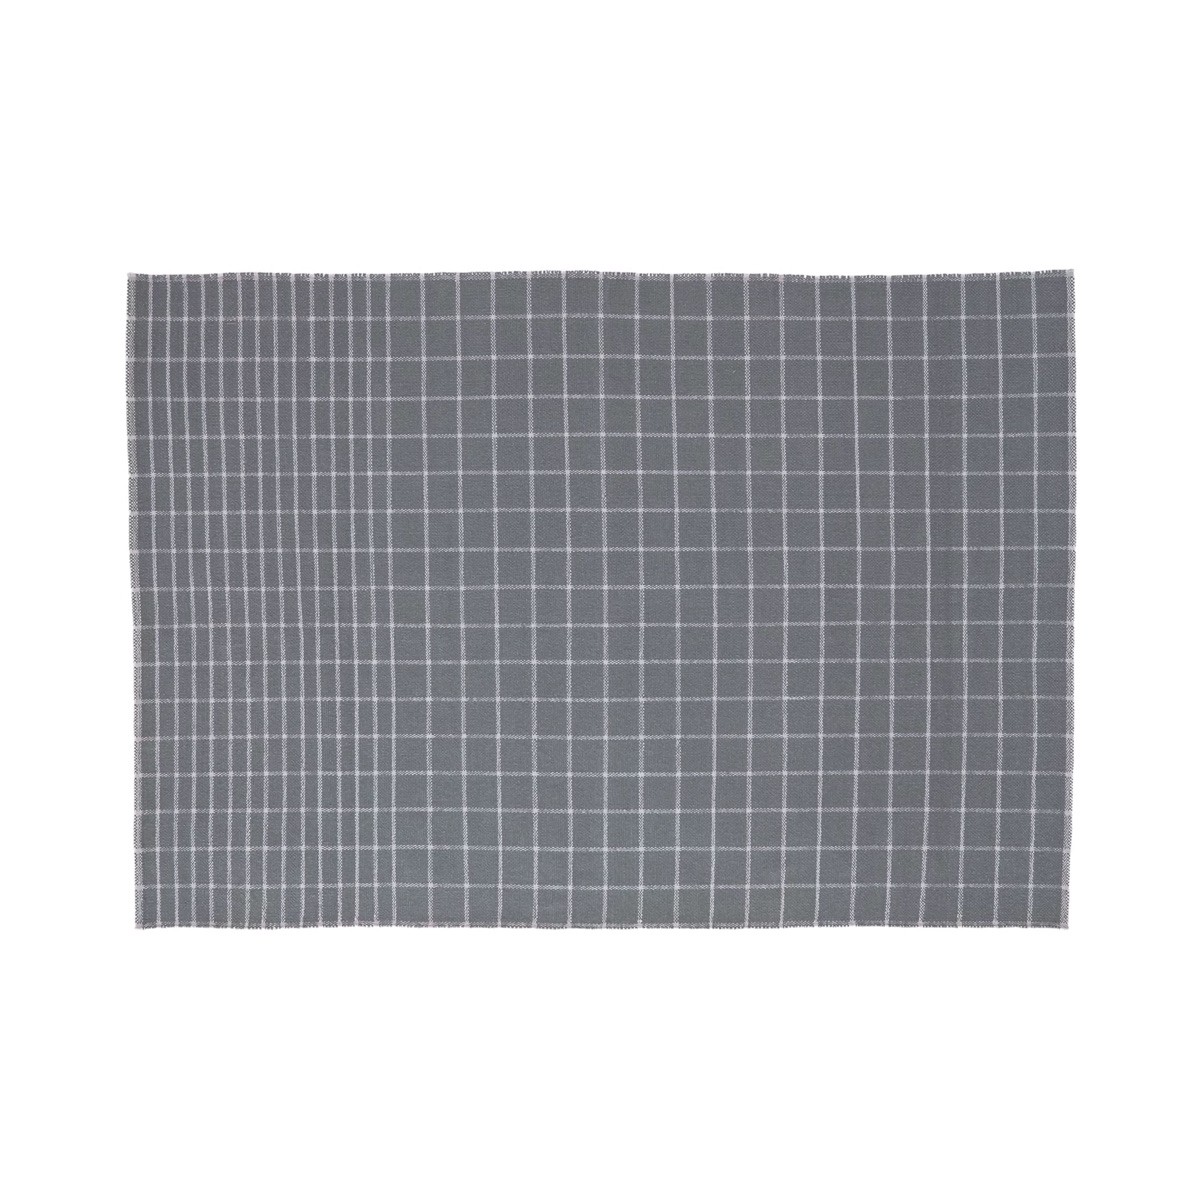 170x240cm - Tiles 2 rug